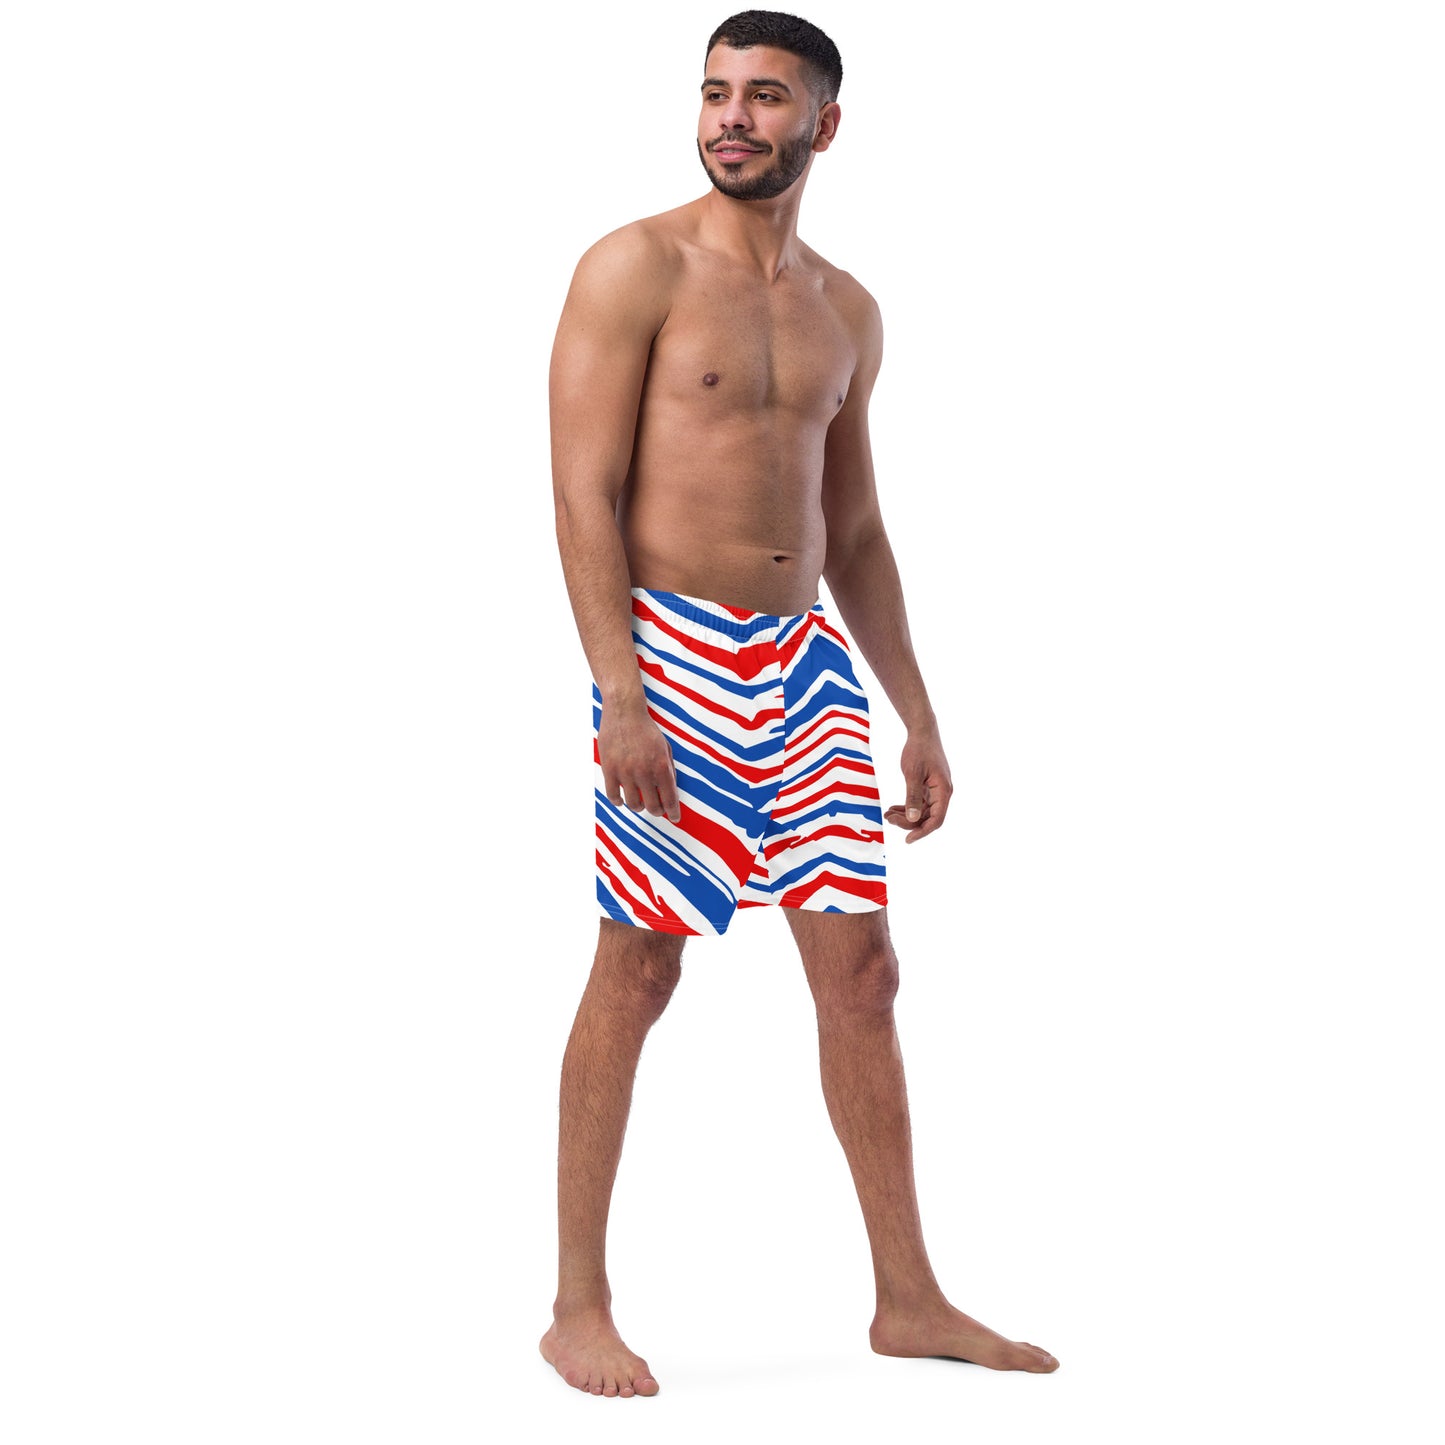 Buffalo zubaz men's swim trunks, Buffalo men swim trunks, Zubaz swimwear, Zubaz swim shorts